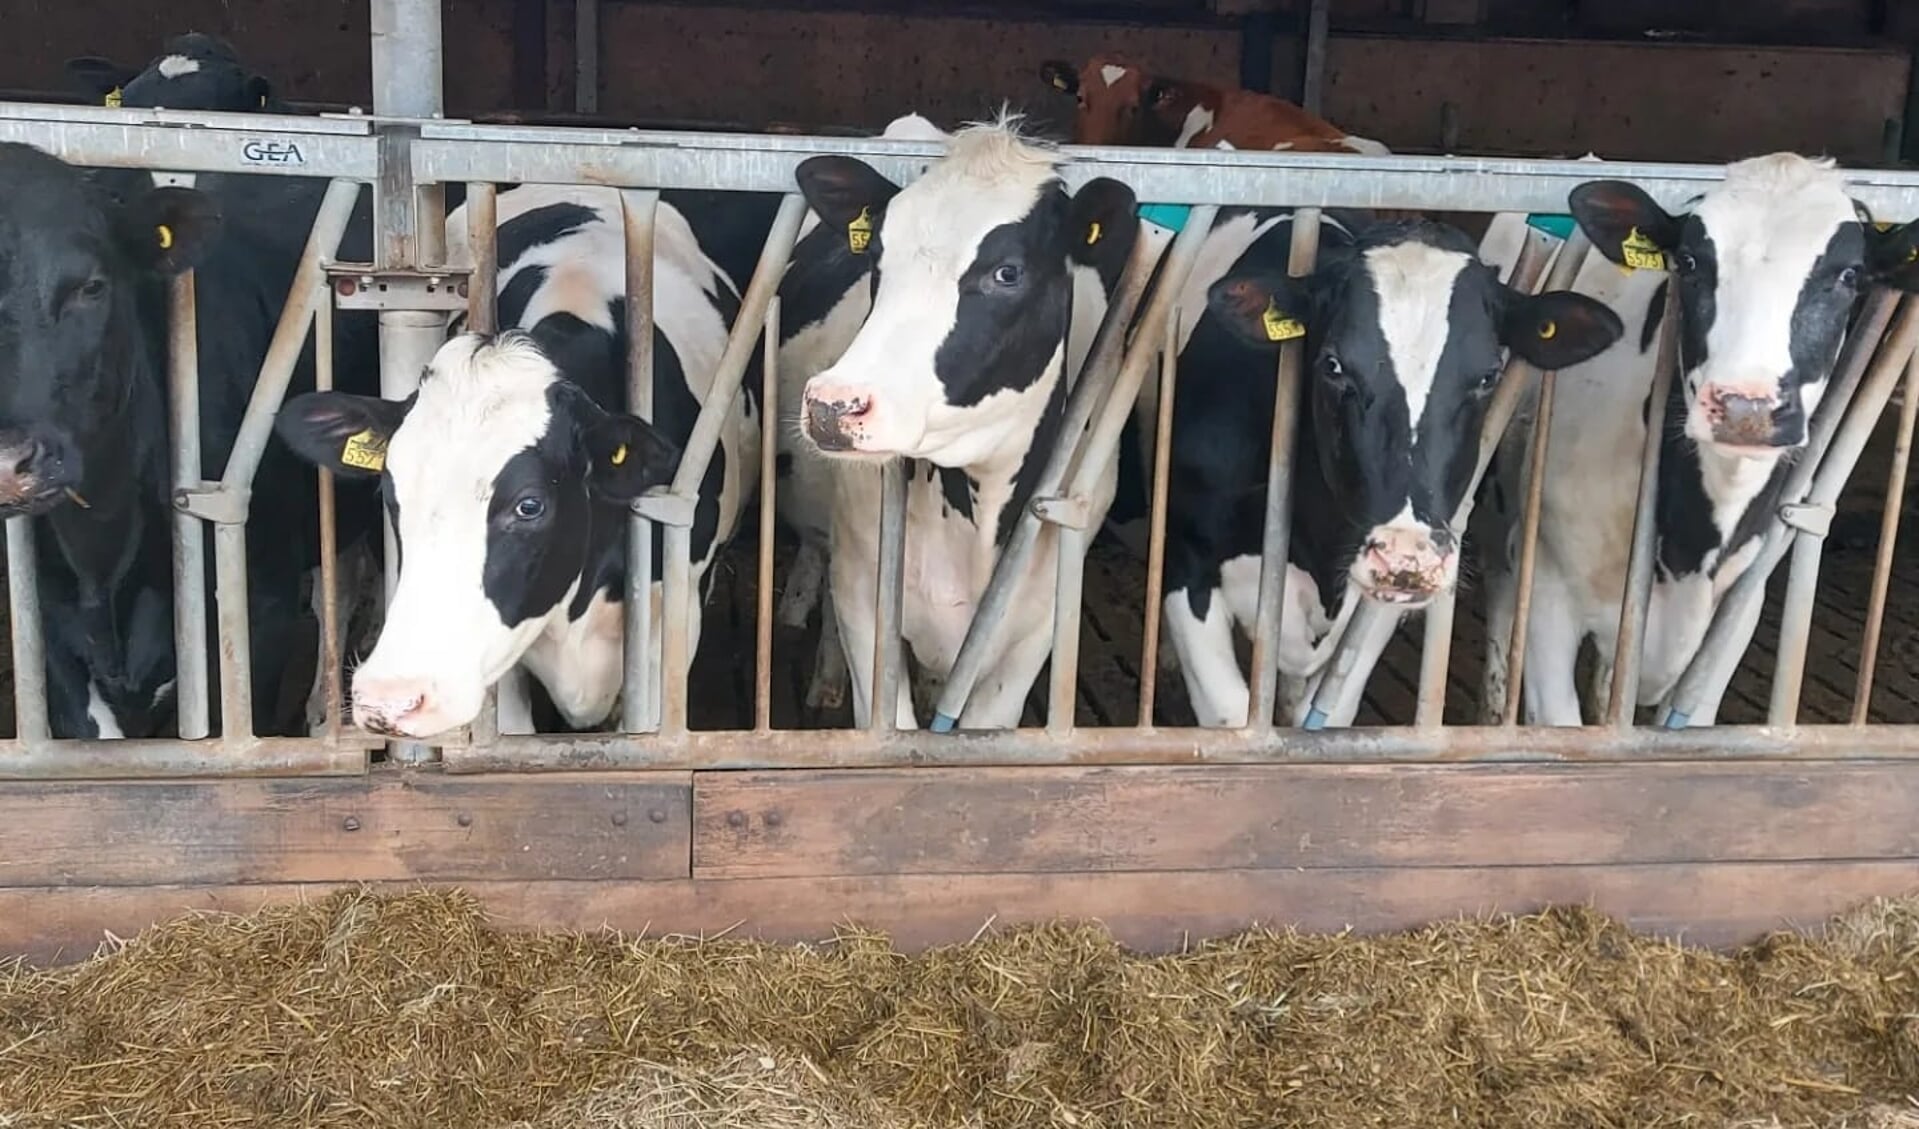 Koeien op stal produceren meer stikstof (ammoniak) dan was gedacht, in 'emissie-arme' stallen.